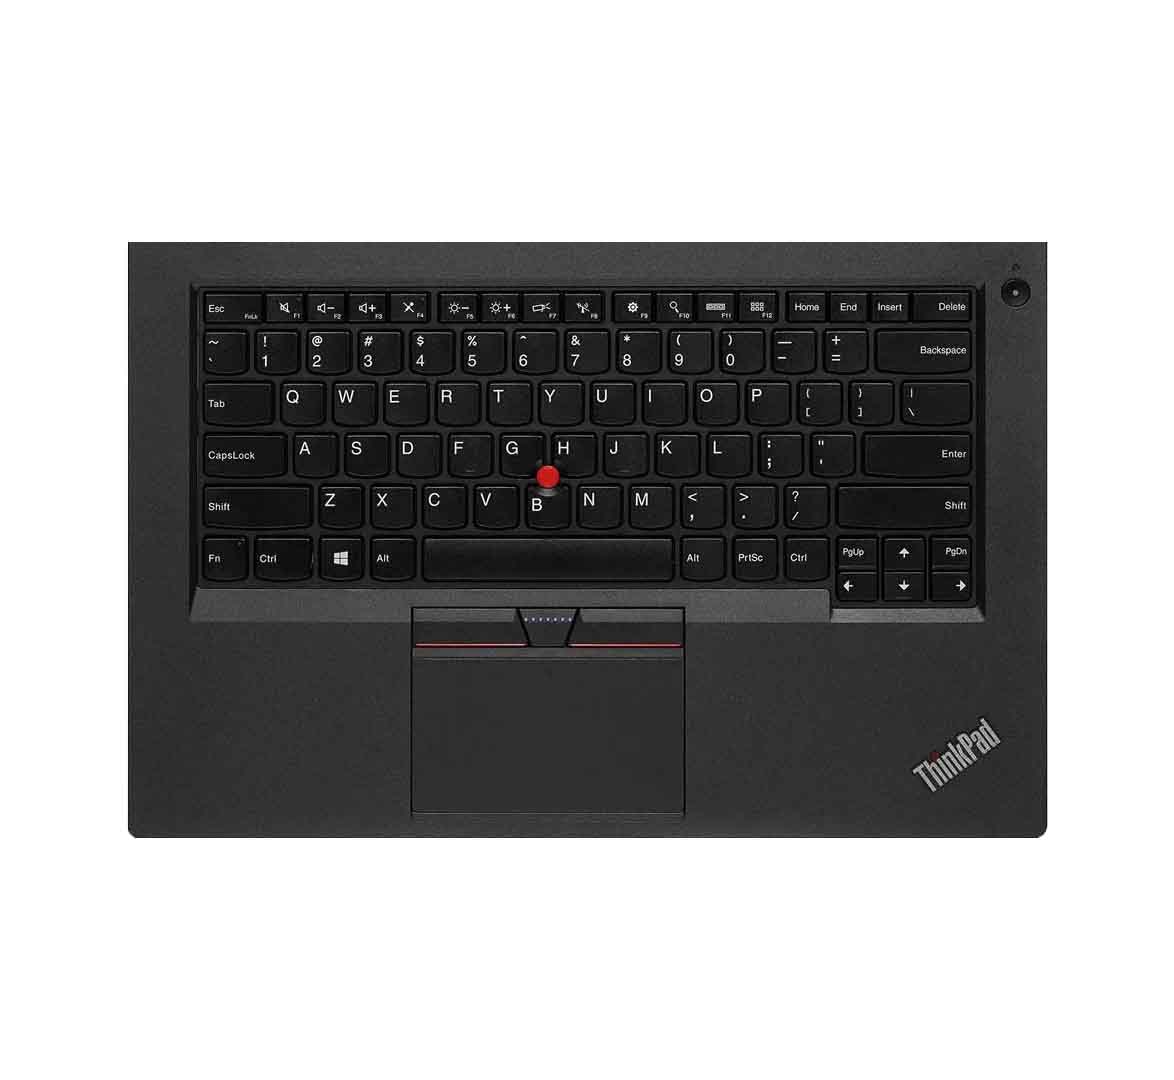 Lenovo ThinkPad L460 Business Laptop, Intel Core i3-6th Generation CPU, 8GB RAM, 500GB HDD, 14 inch Display, Windows 10 Pro